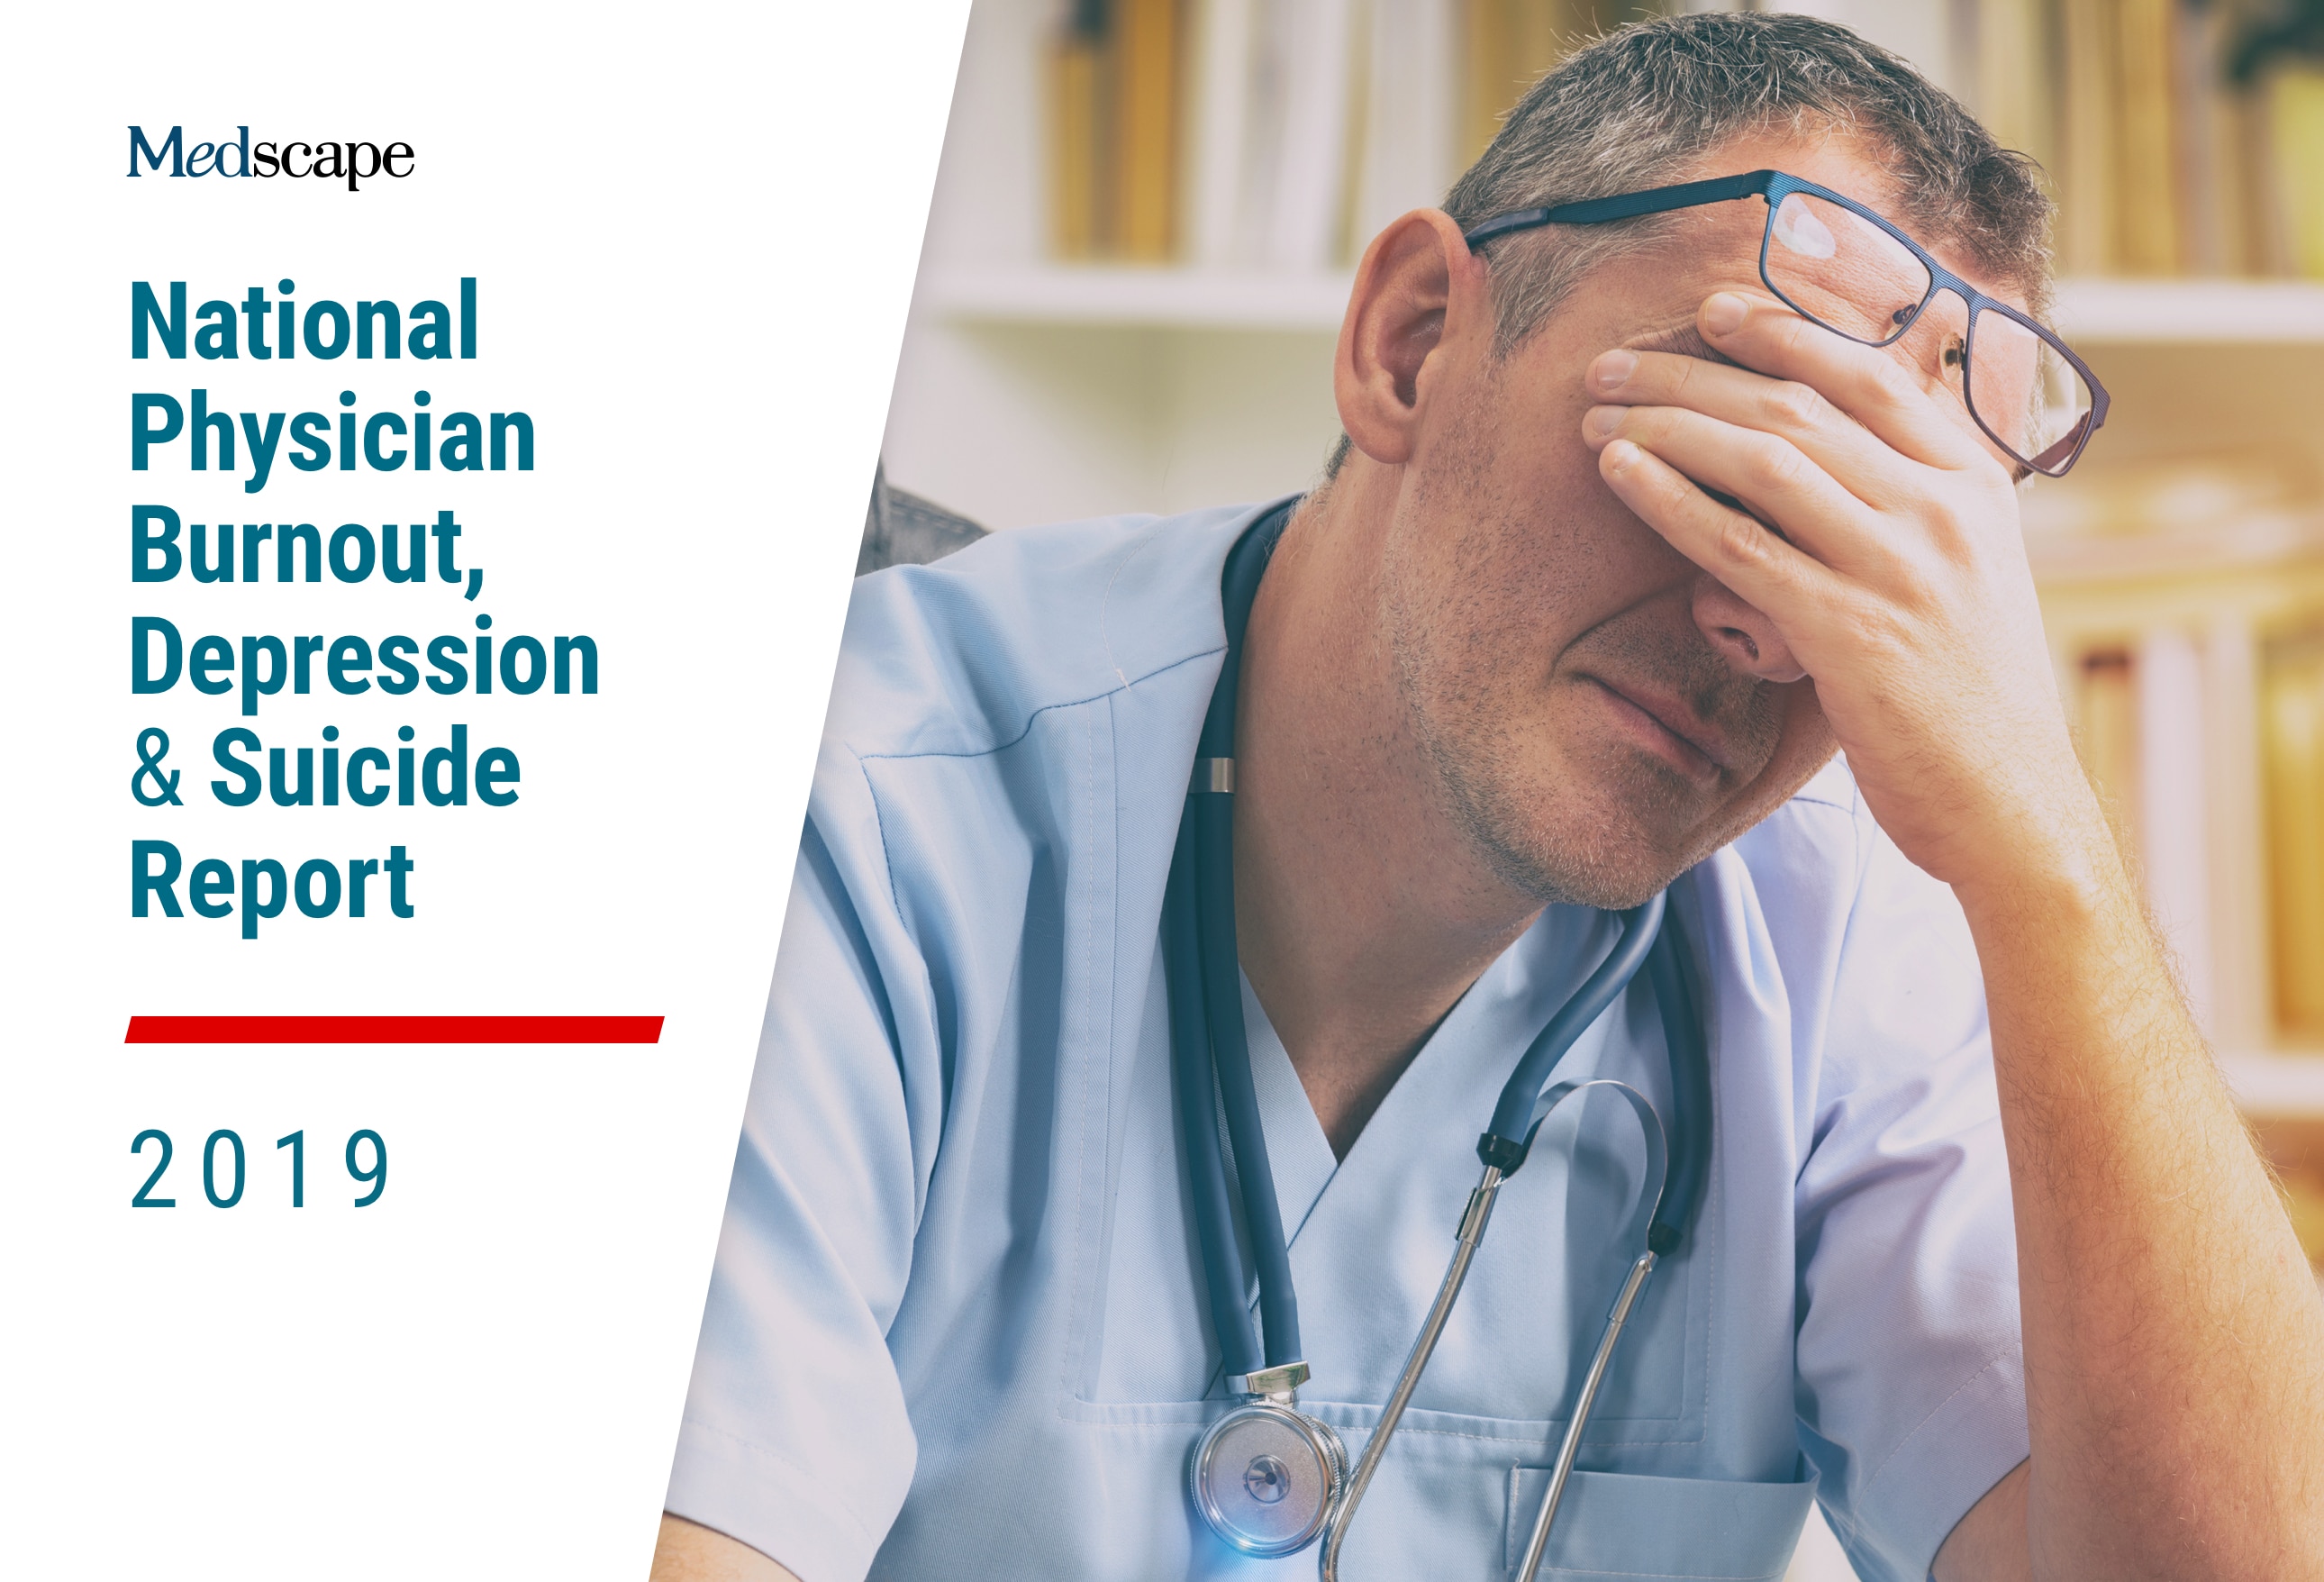 Medscape National Physician Burnout, Depression & Suicide Report 2019